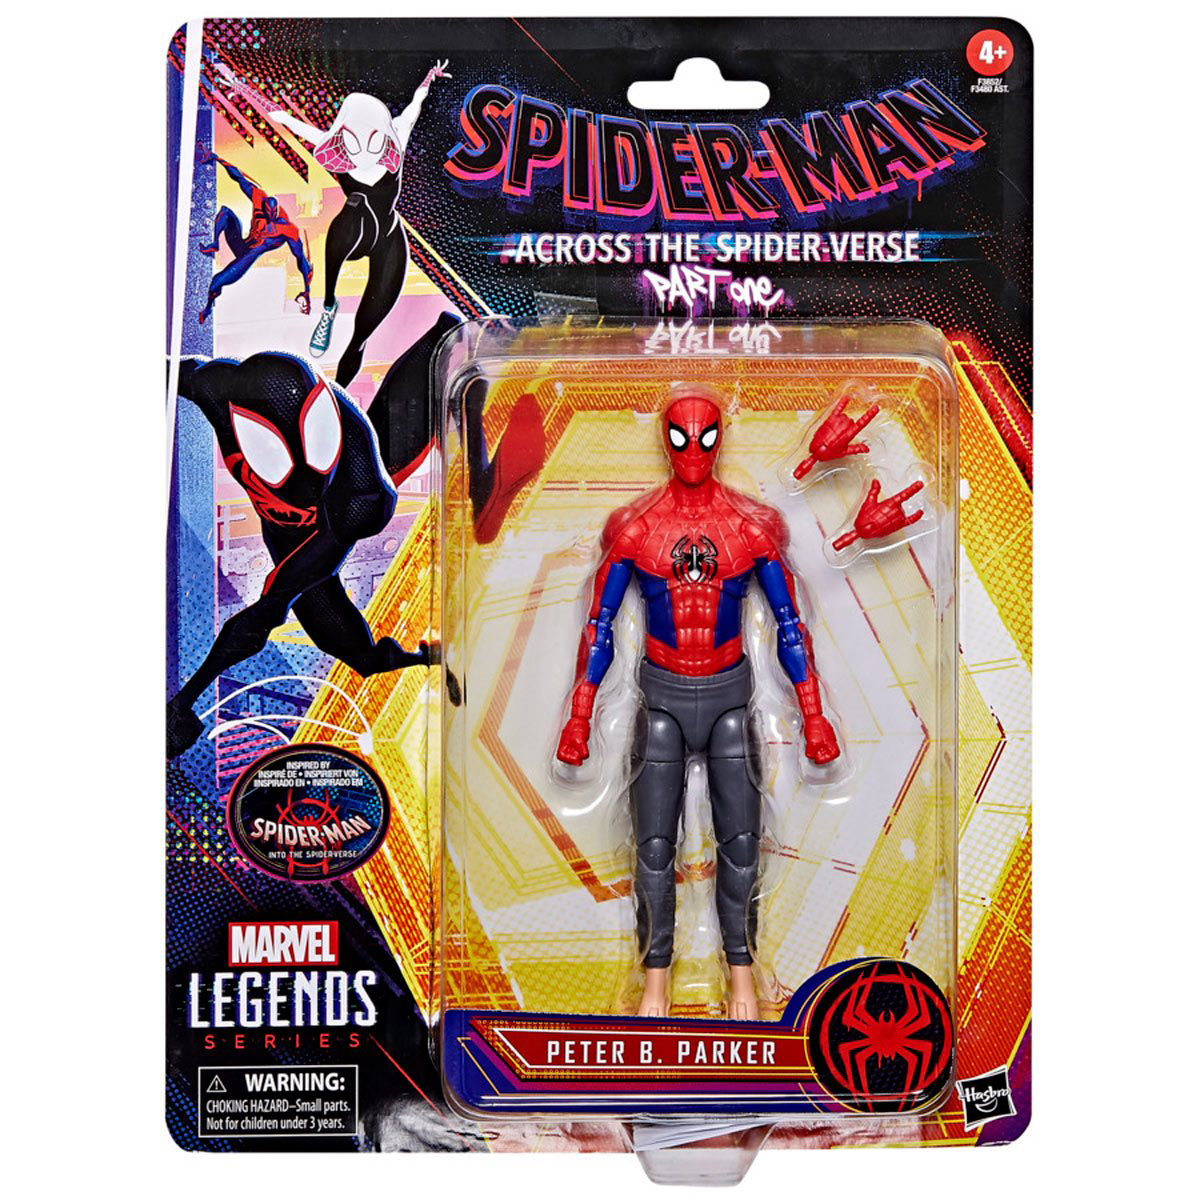 Peter-B-Parker-Marvel-Legends-Spider-Man-Across-the-Spider-Verse-Action-Figure-1